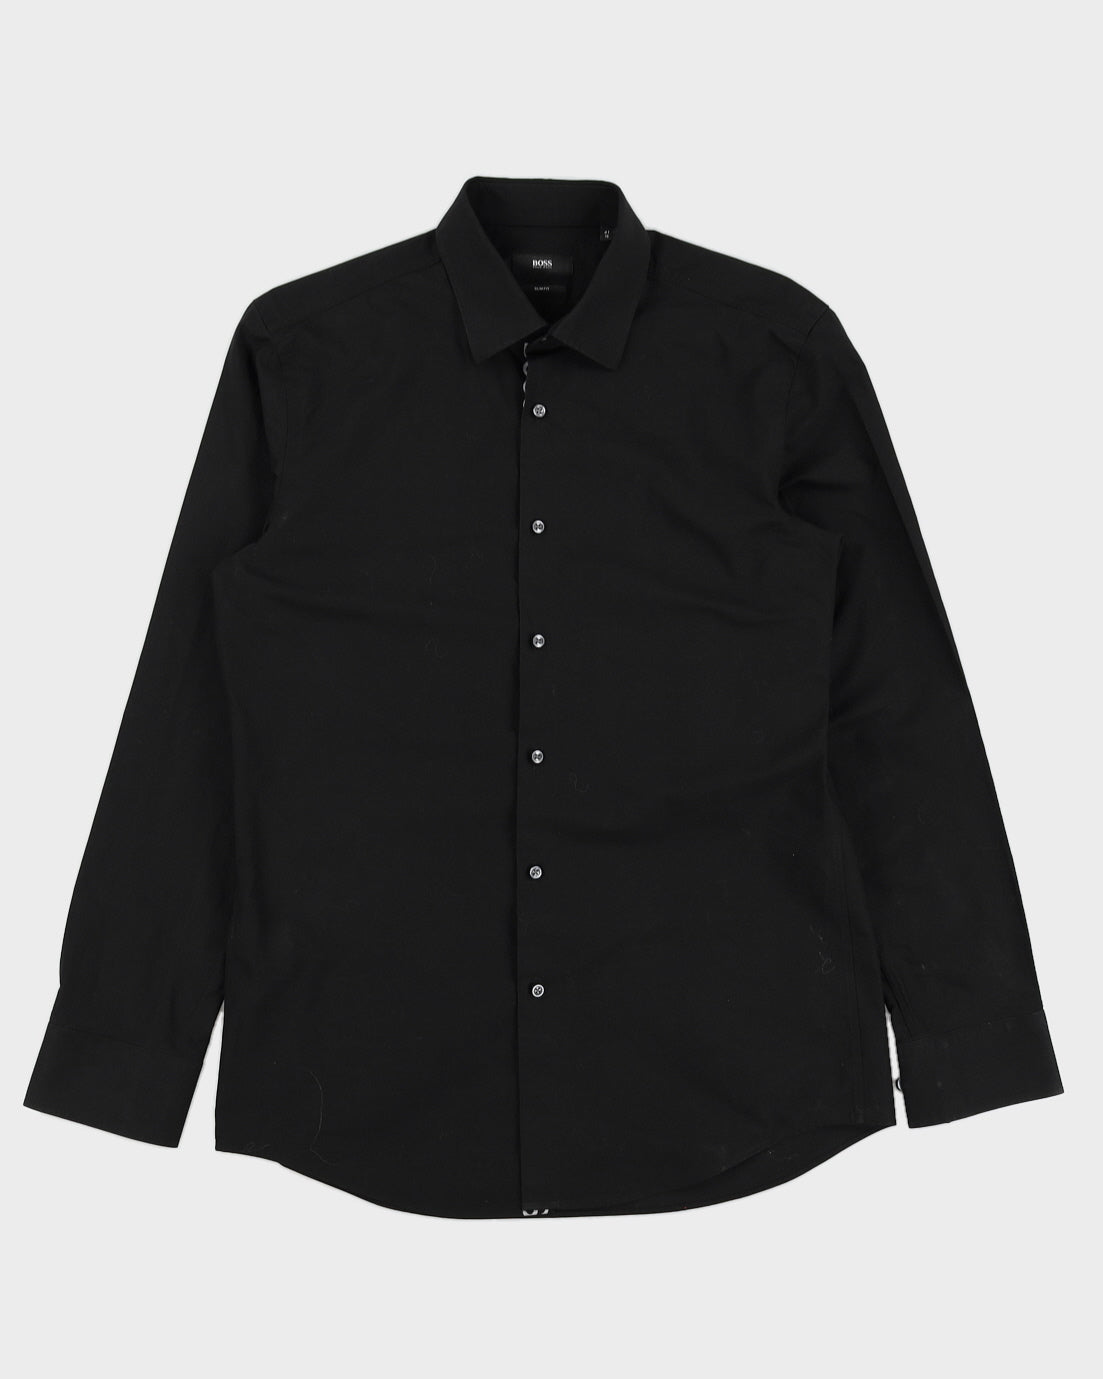 Boss By Hugo Boss Plain Black Dress Shirt - M